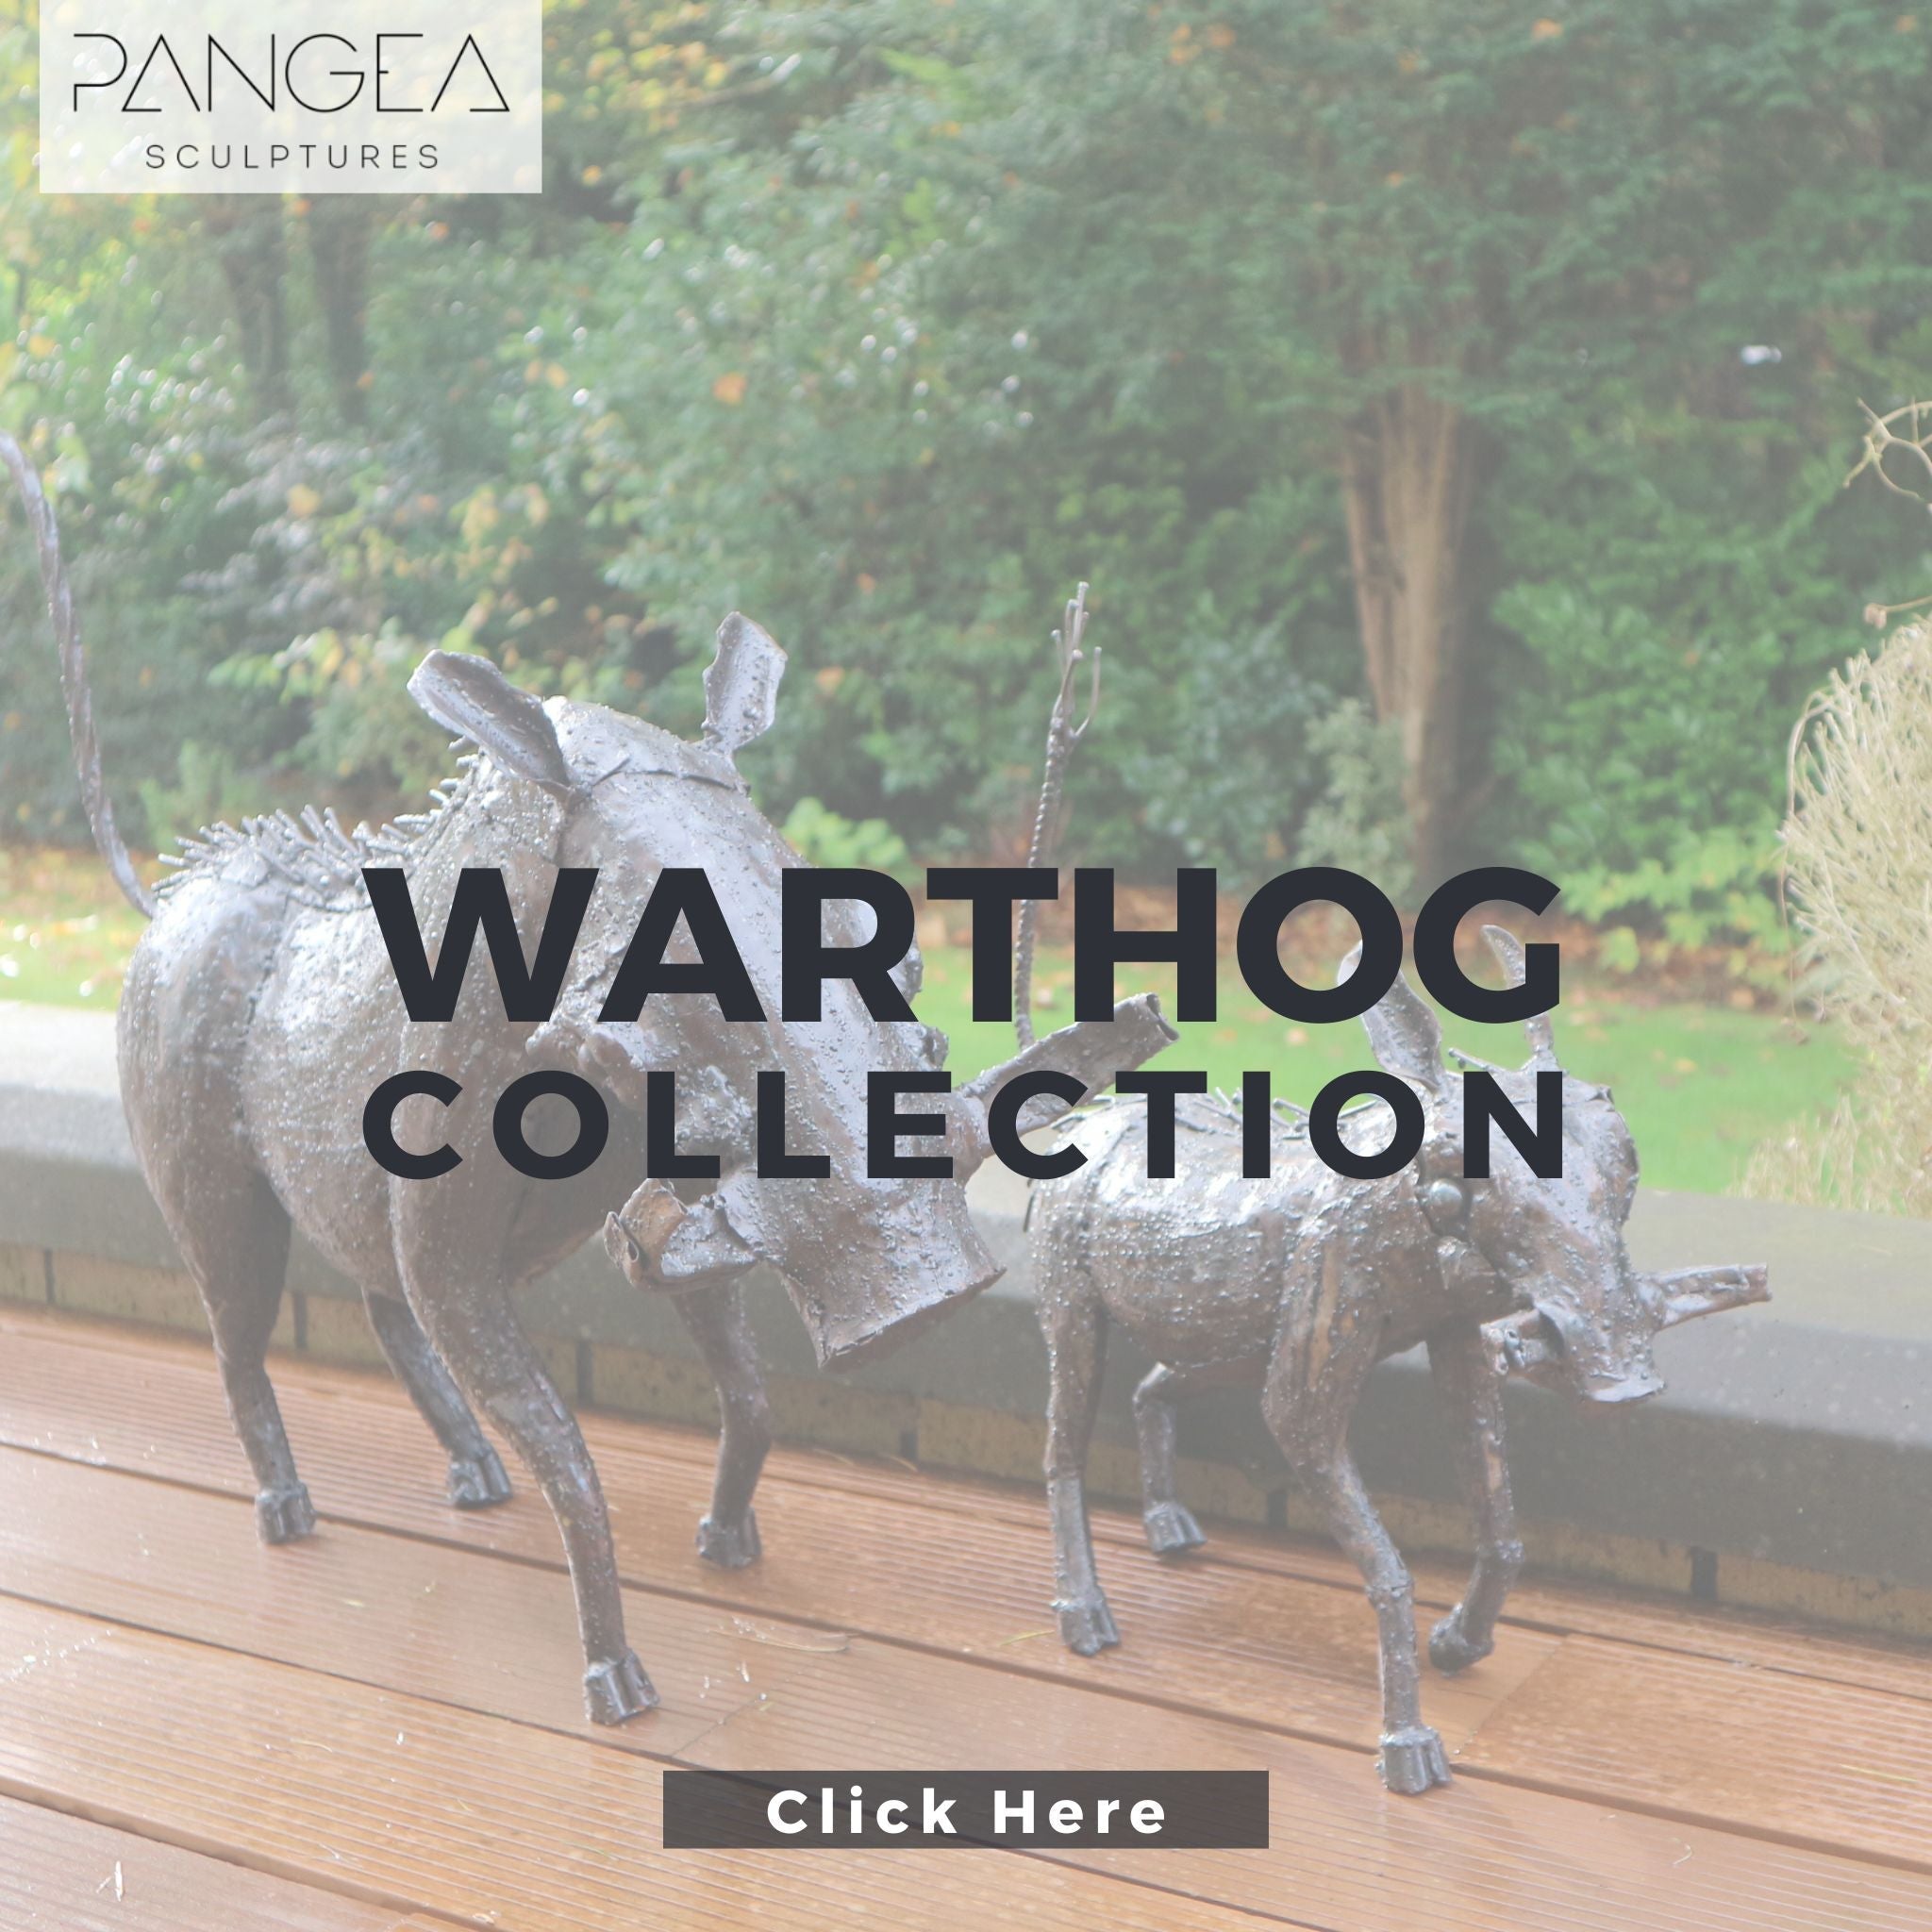 Warthog Sculptures - Pangea Sculptures